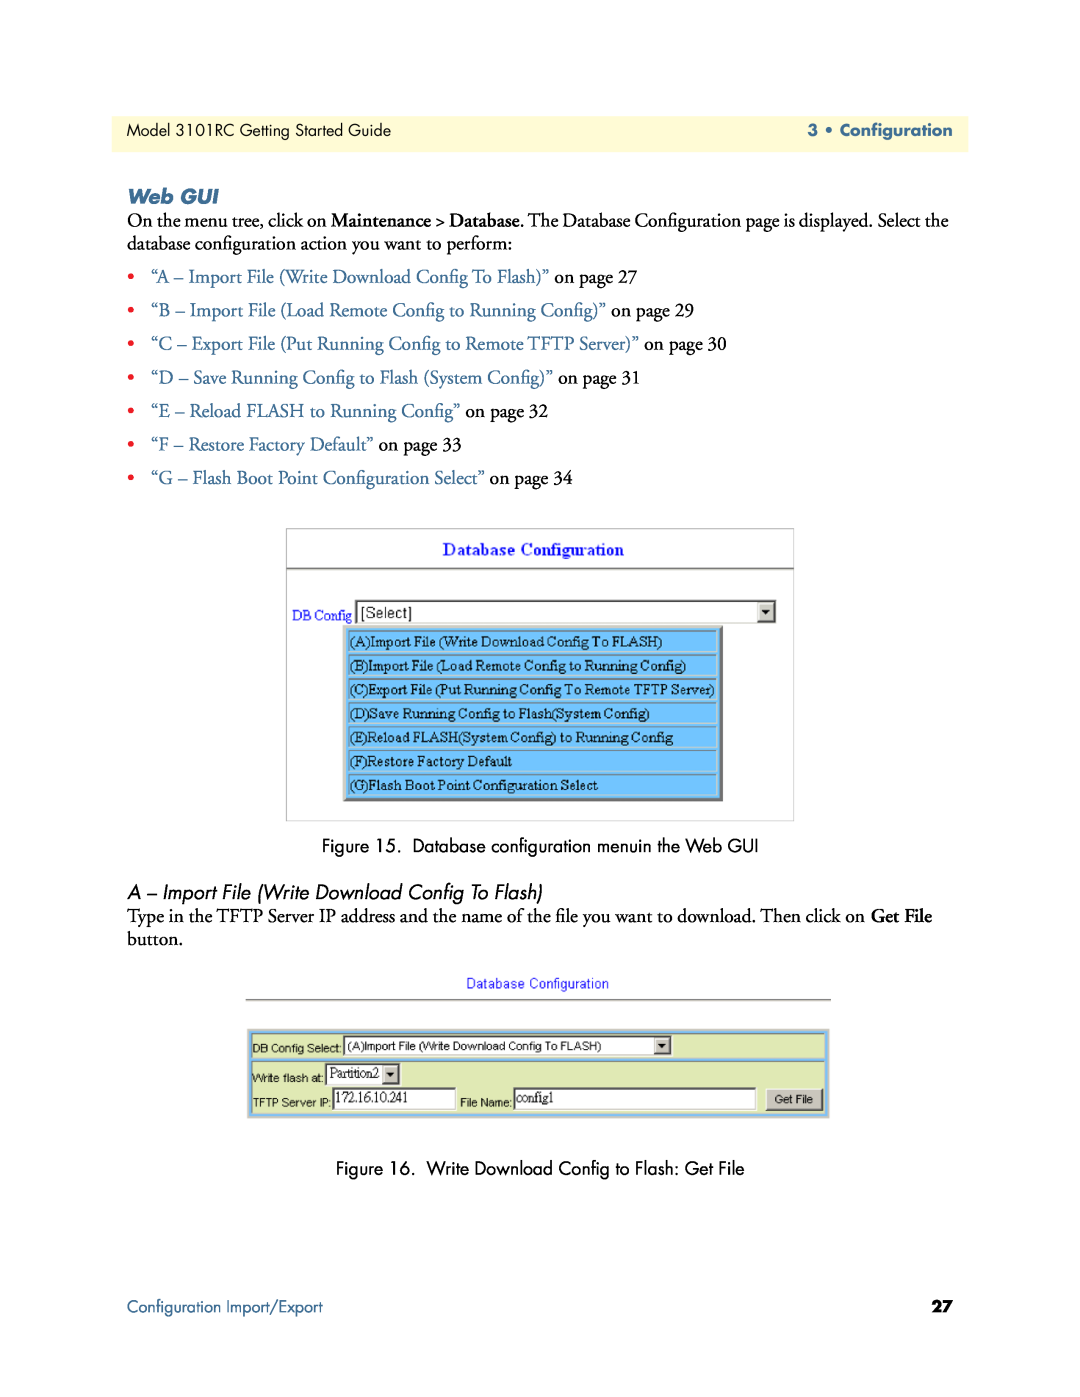 Patton electronic Model 3101RC manual A - Import File Write Download Conﬁg To Flash, Web GUI 